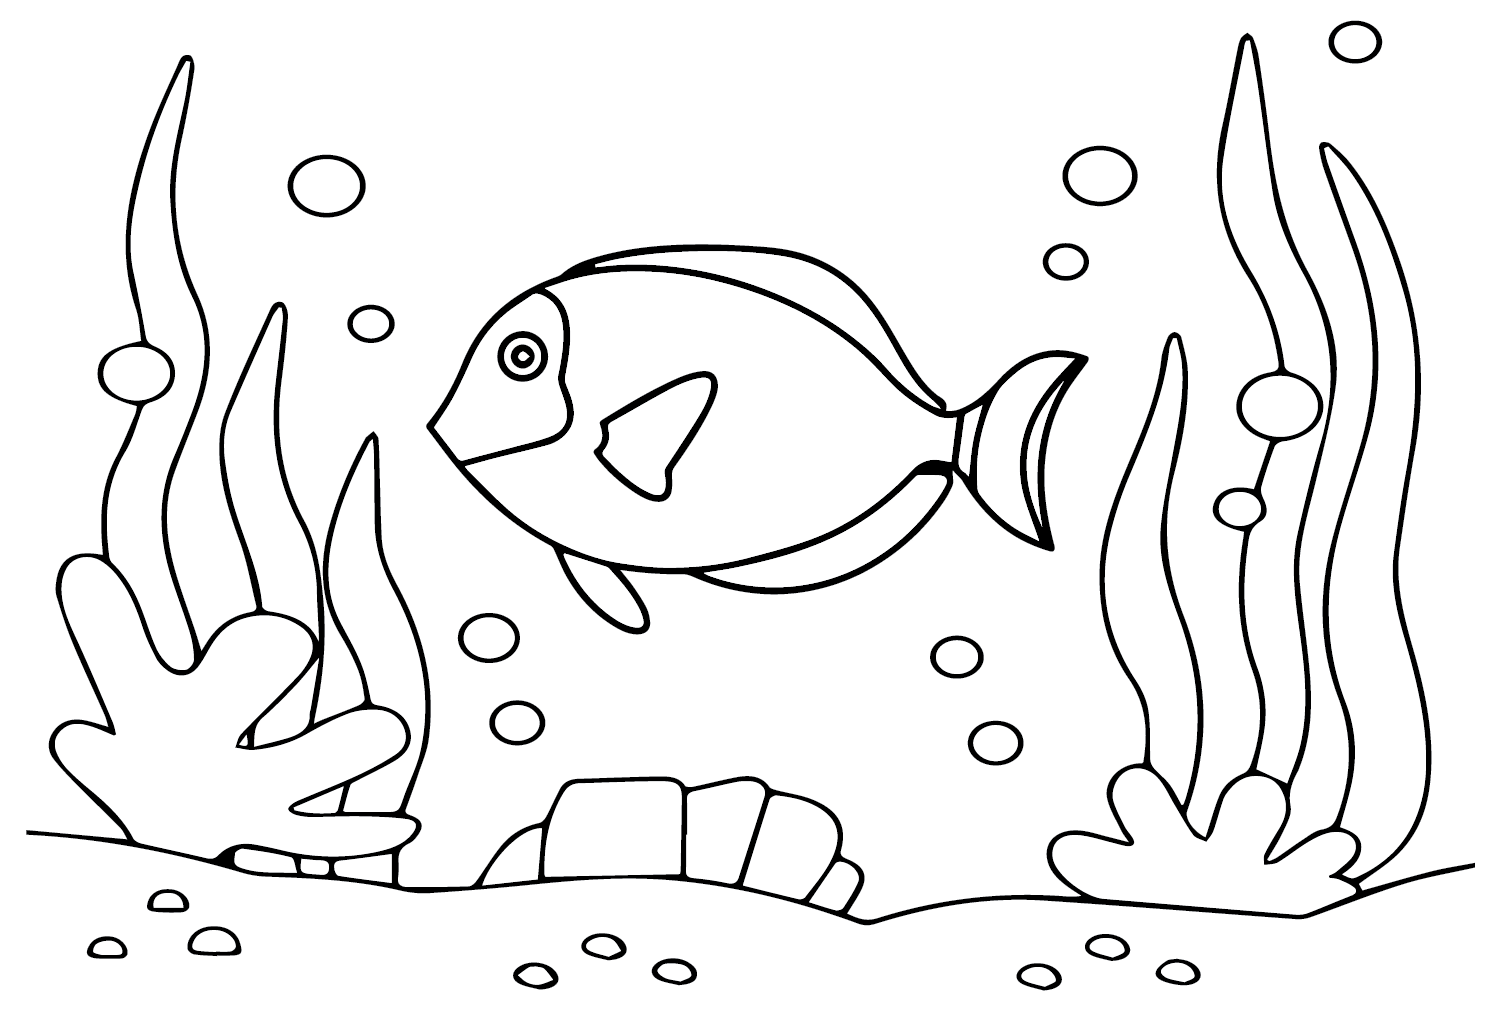 Tang Fish Cartoon Coloring Page - Free Printable Coloring Pages